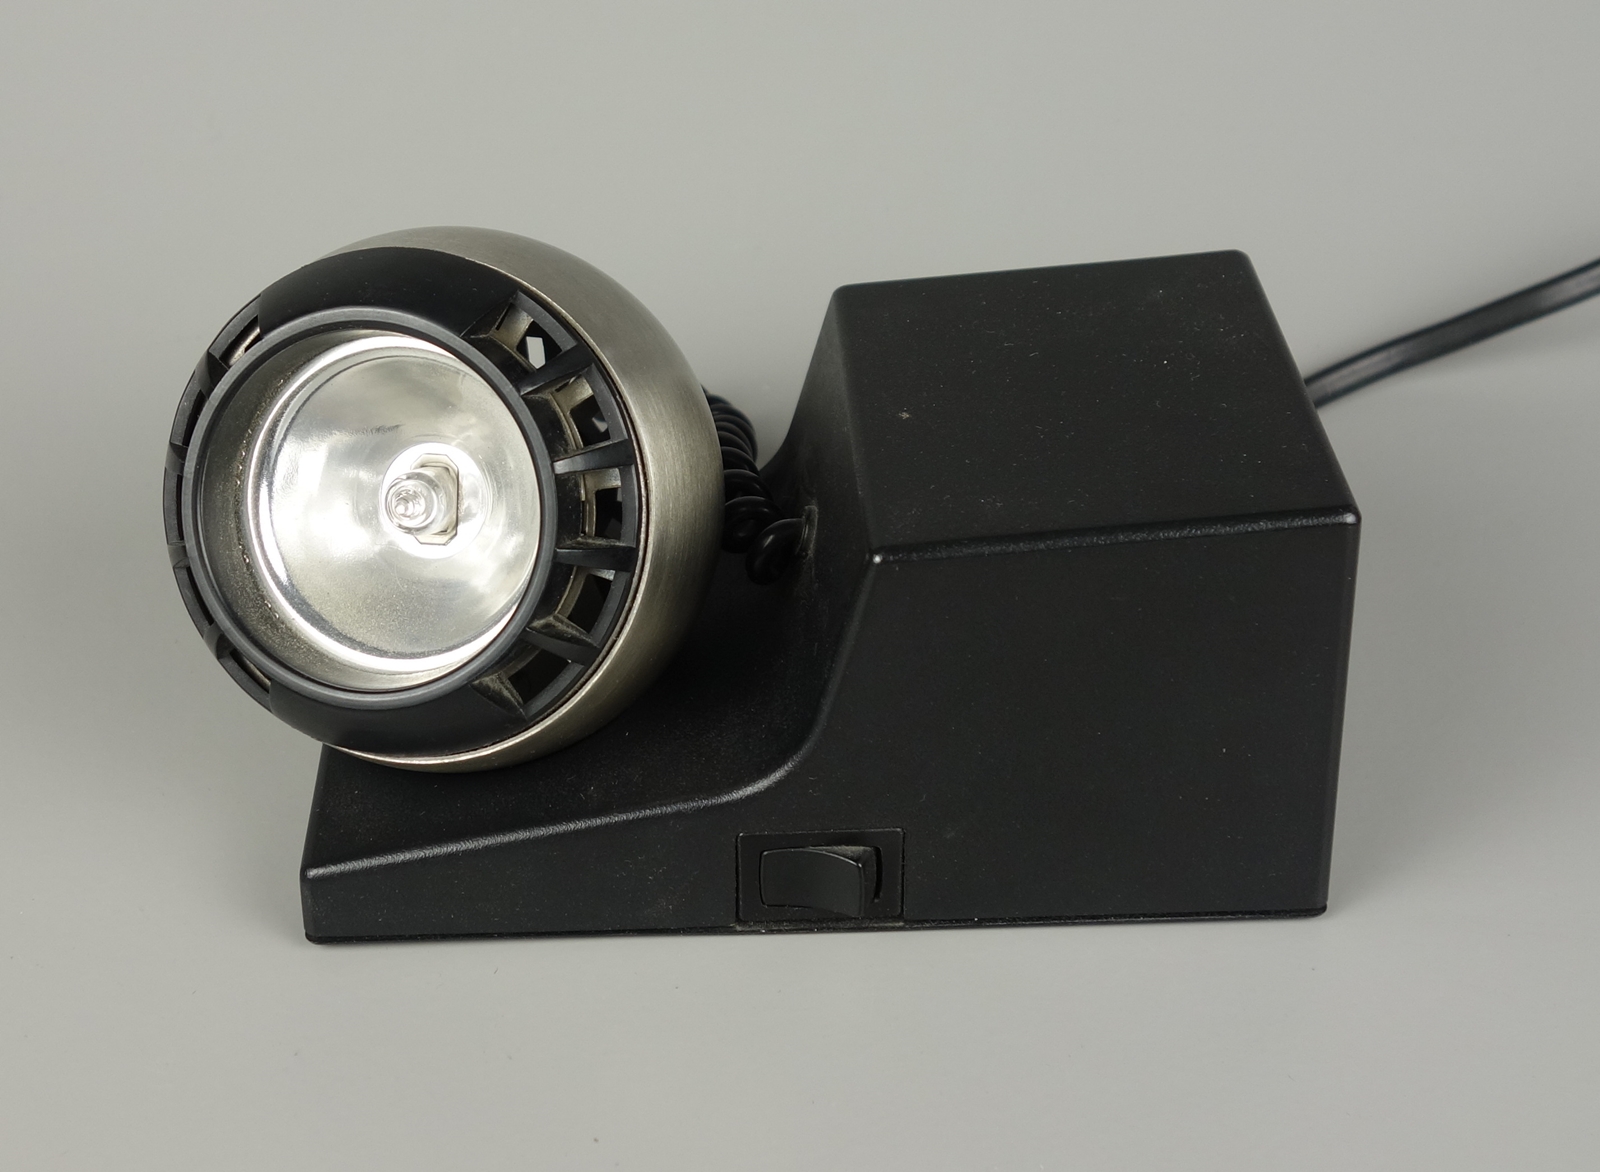 OSRAM minispot, 41701220 V, 20 W, magnetische Kugellampe an Spiralkabel, D.ca.70mm, schwarze